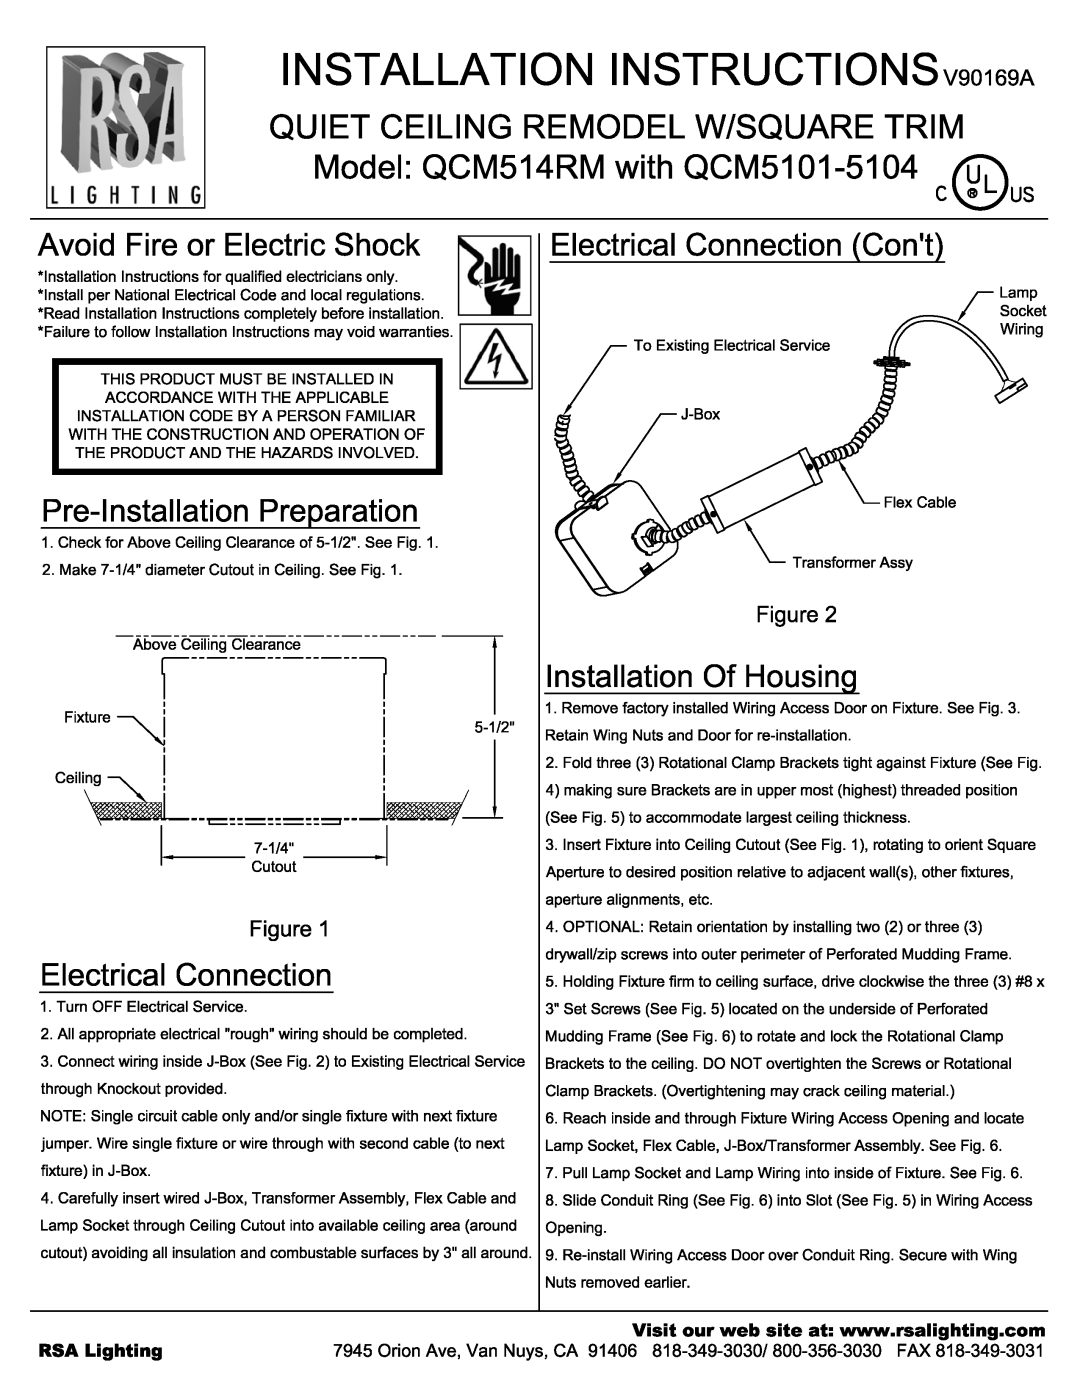 Cooper Lighting QCM514RM, QCM5104 manual 